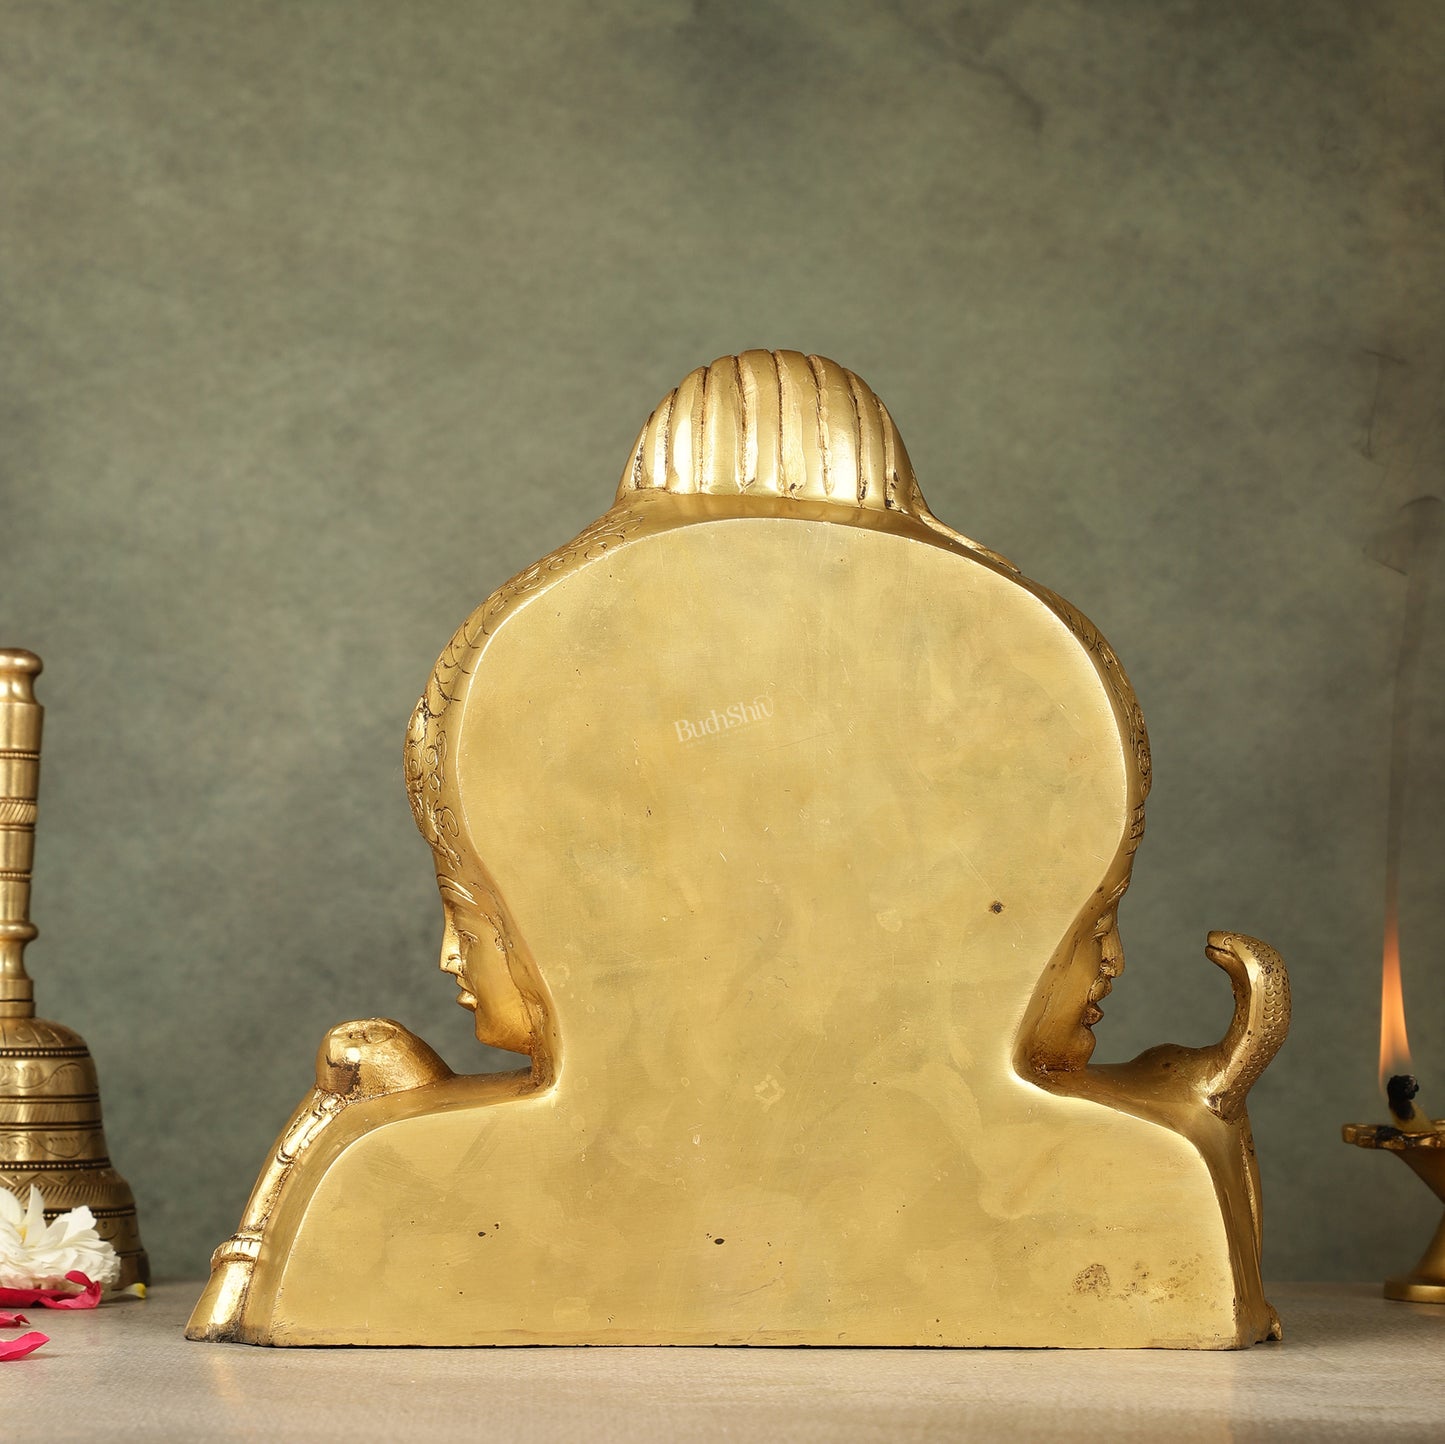 Brass Superfine trimurti Brahma, Vishnu, Mahesh Bust table accent - 9.5 Inch